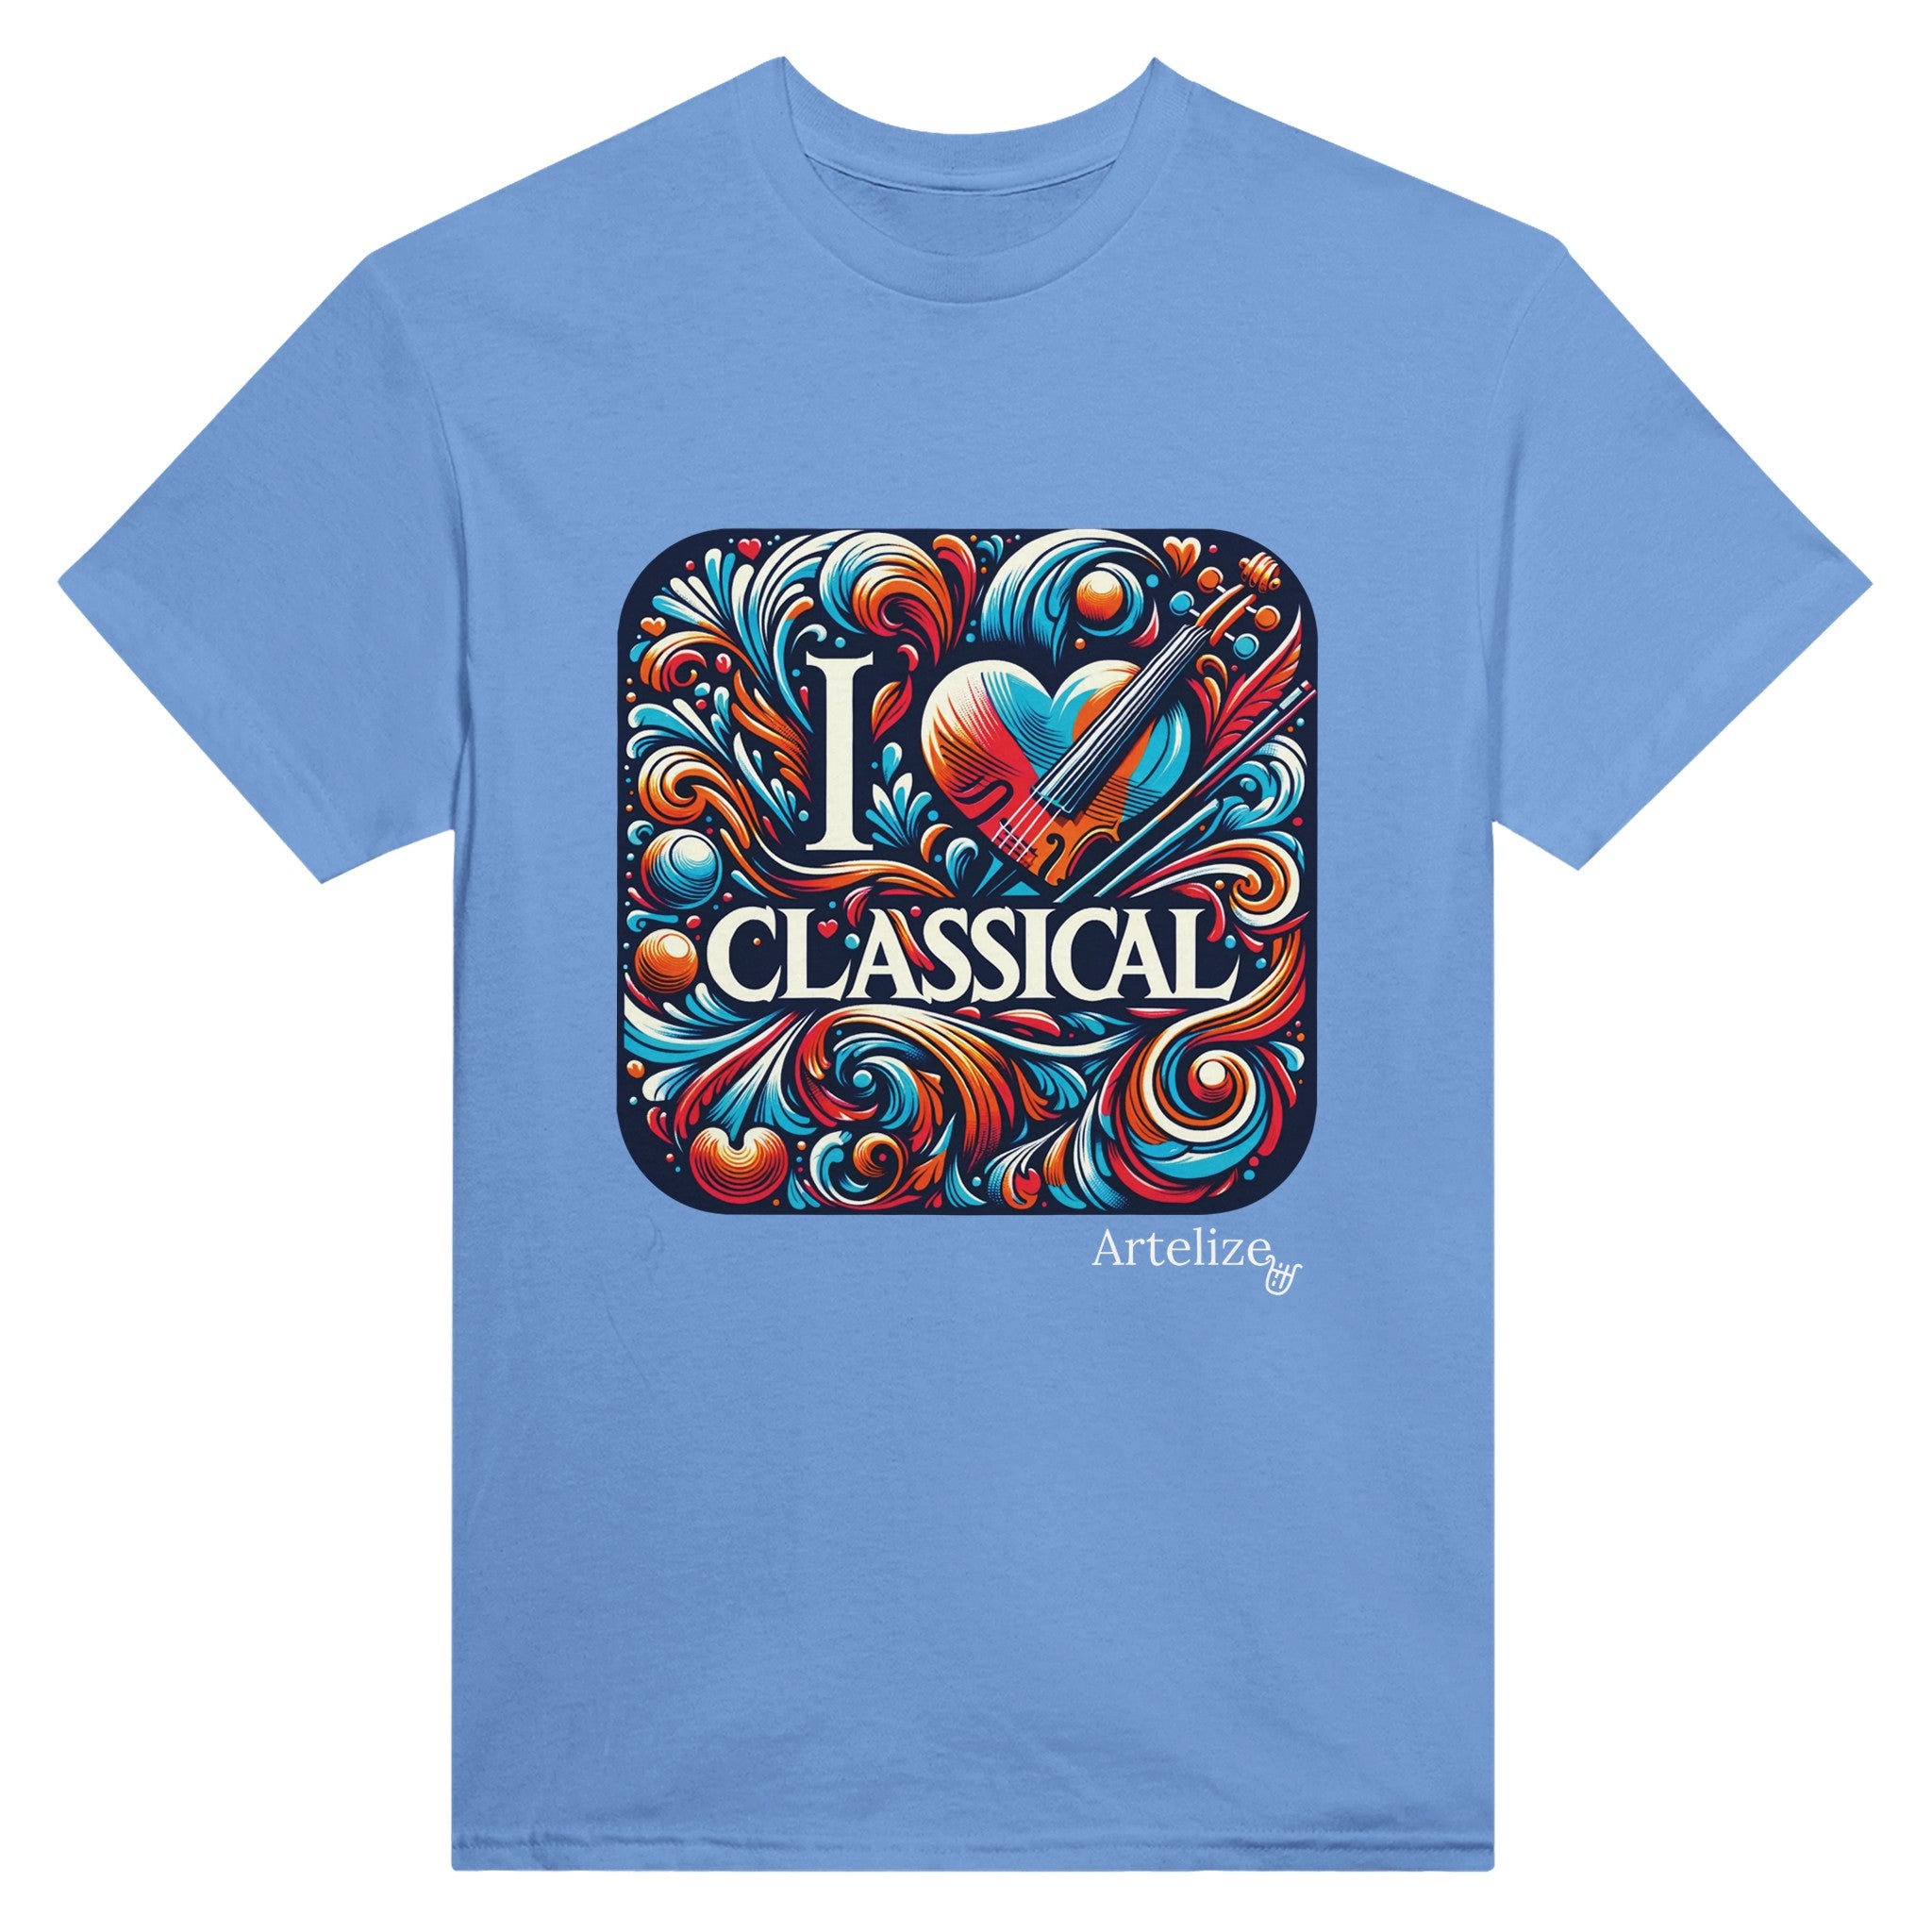 "I LOVE CLASSICAL" Heavyweight Unisex Crewneck T-shirt